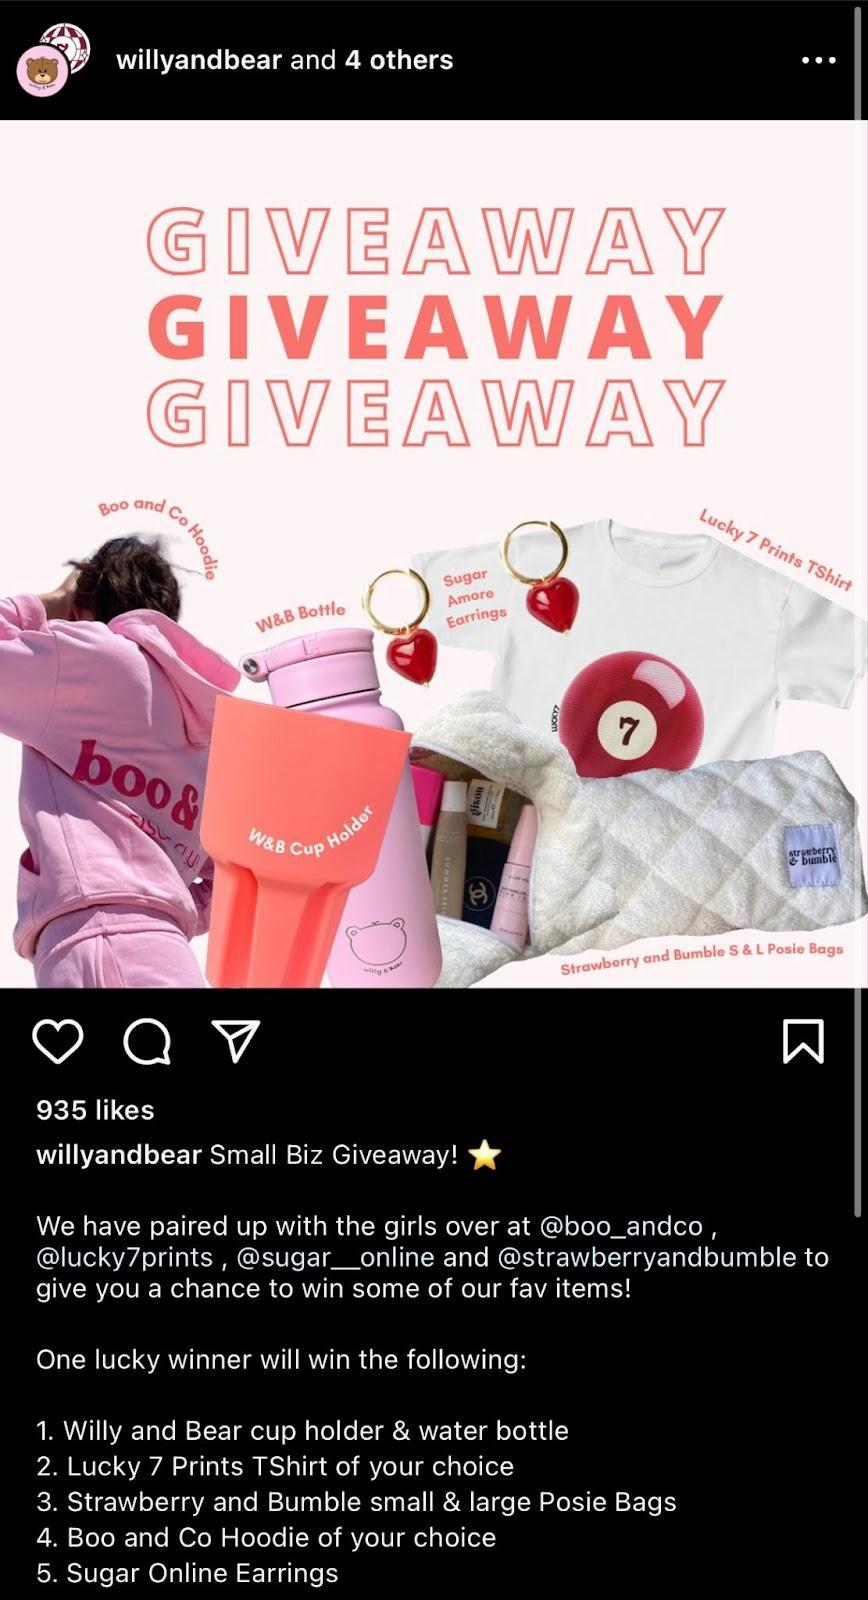 Willyandbear Instagram giveaway post